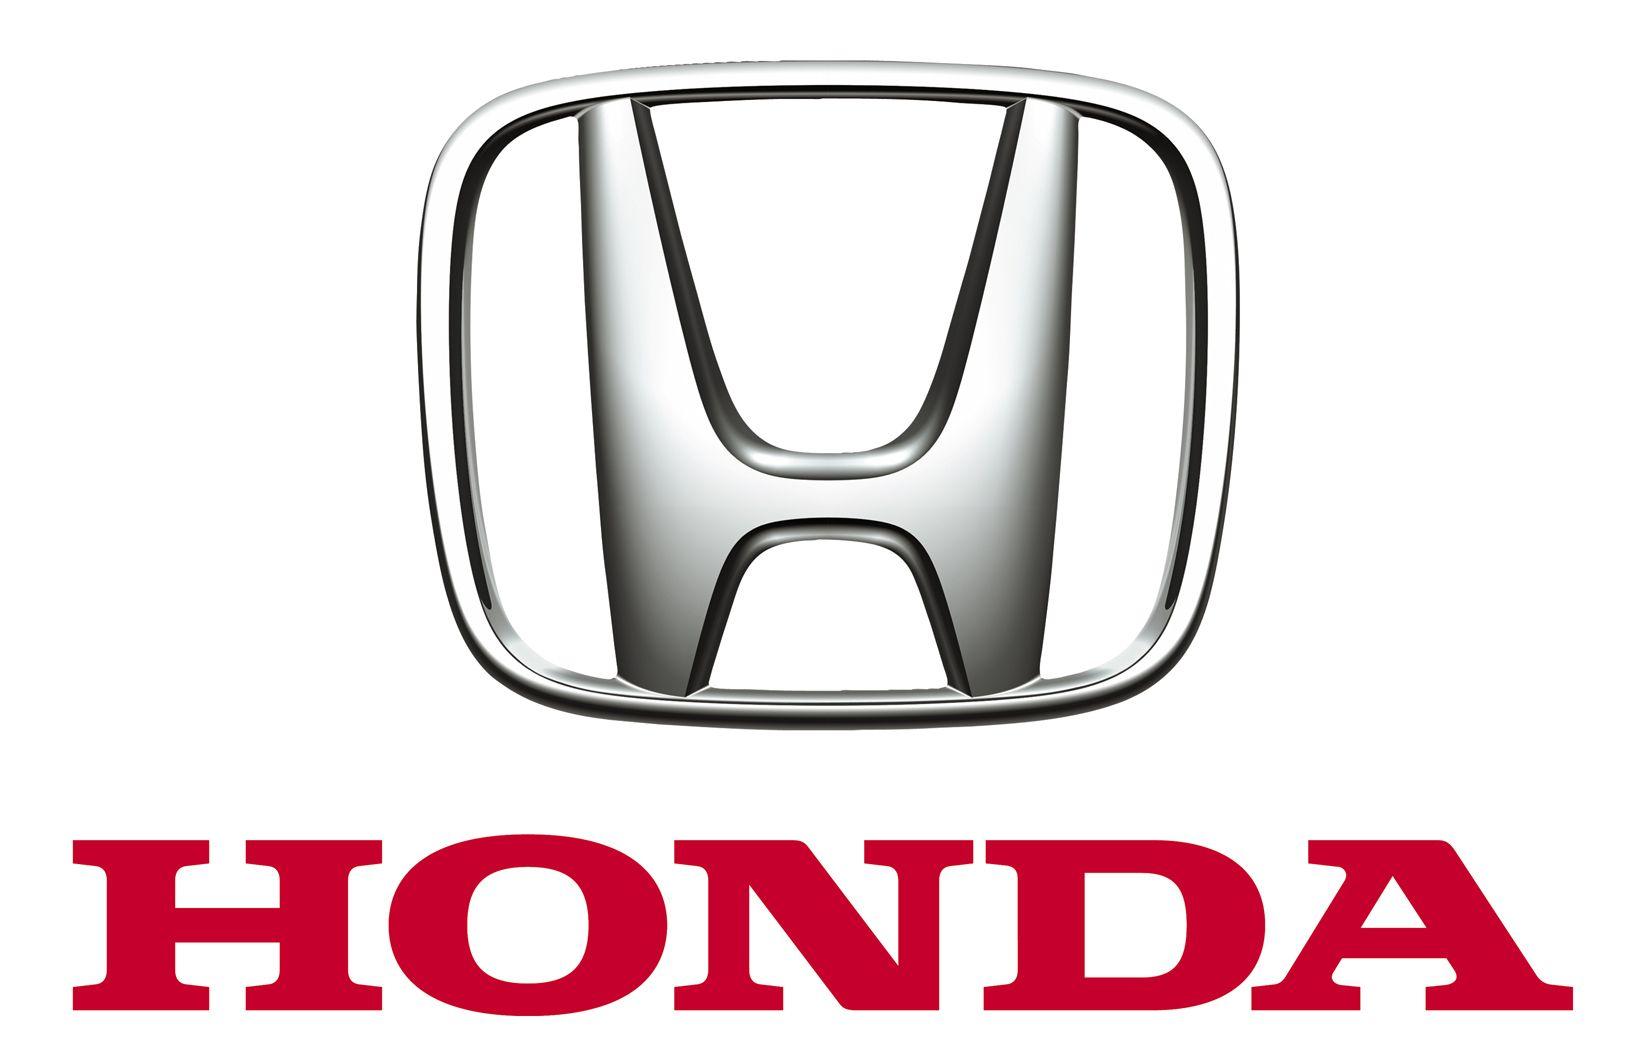 Honda HR-V Logo - The Uniquely Personal And Functional 2016 Honda HR V Launches